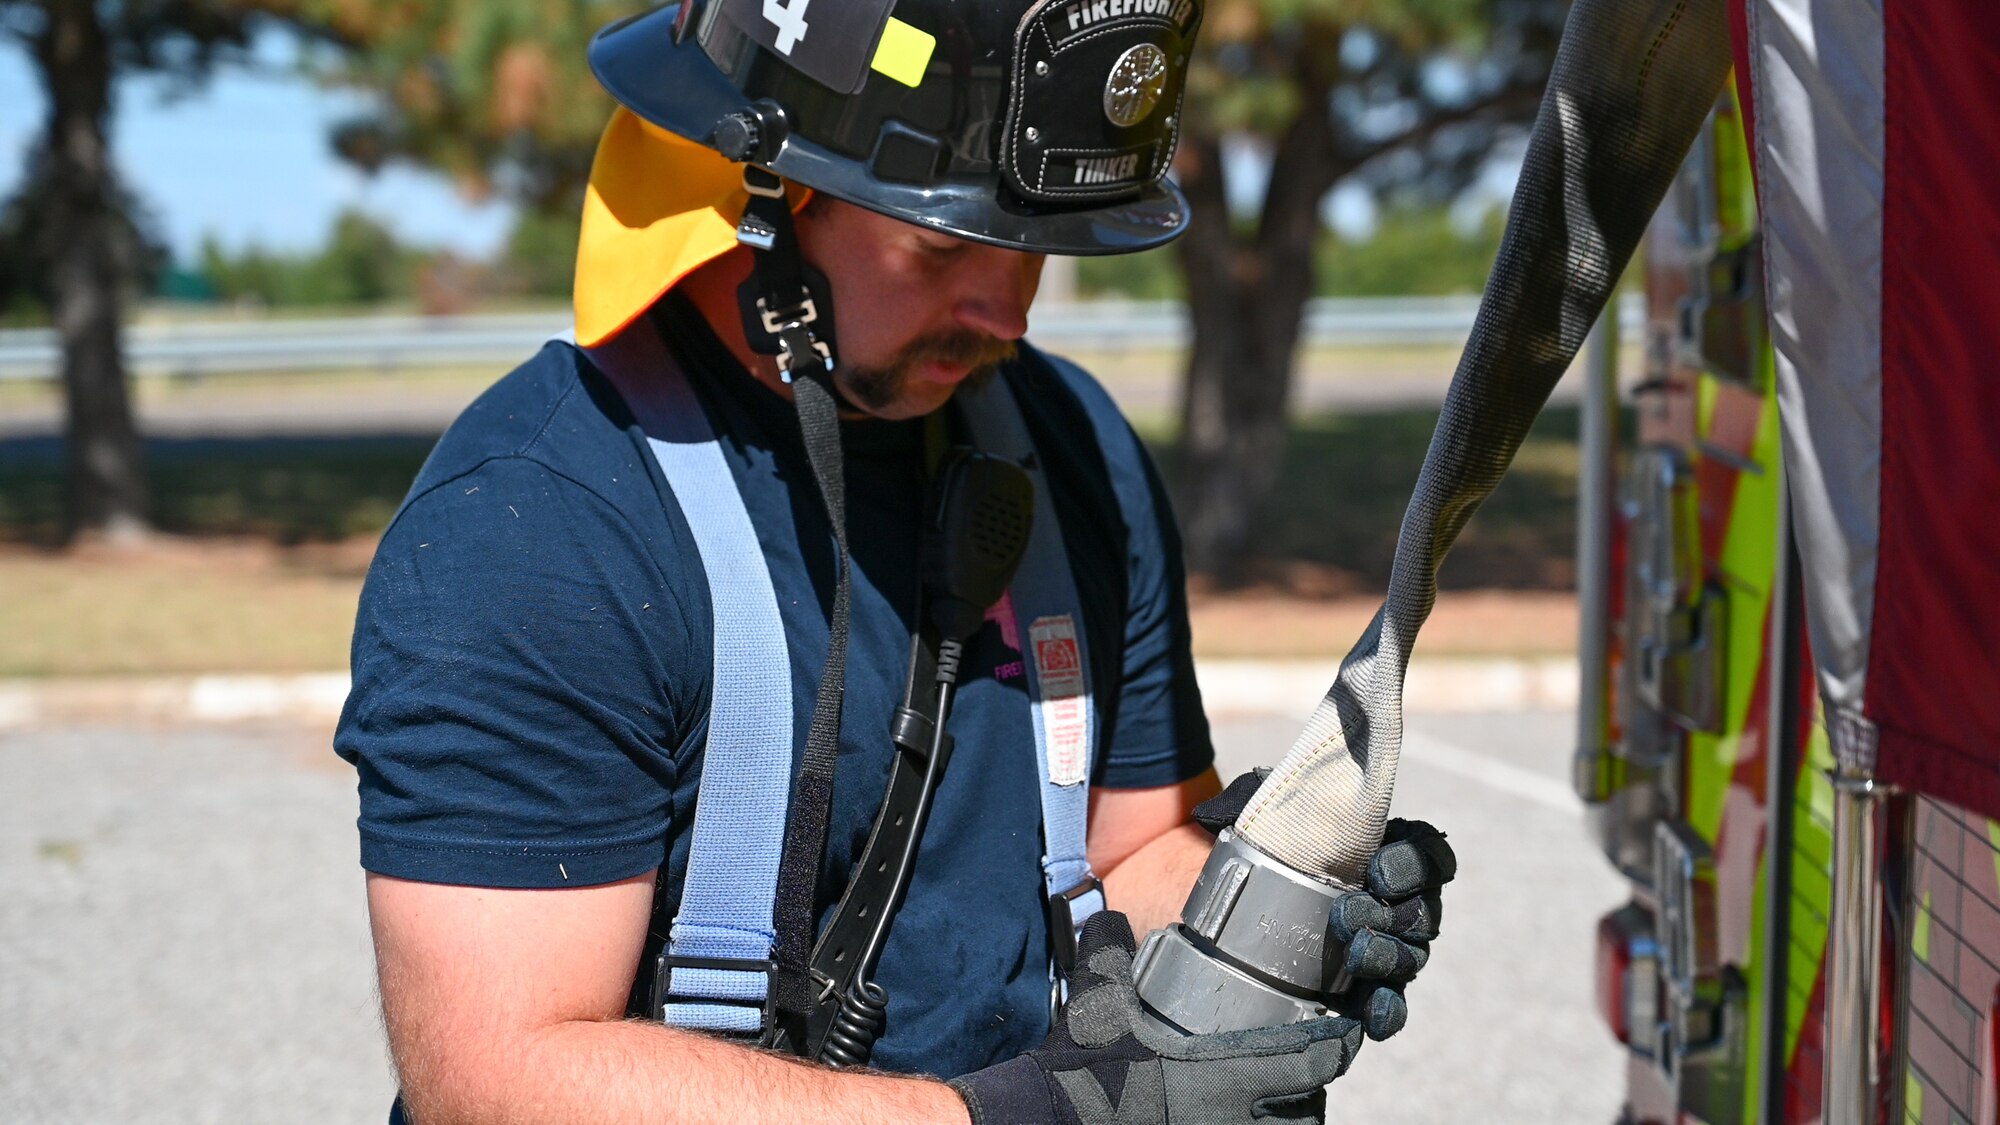 Firefighter holding a fire hose